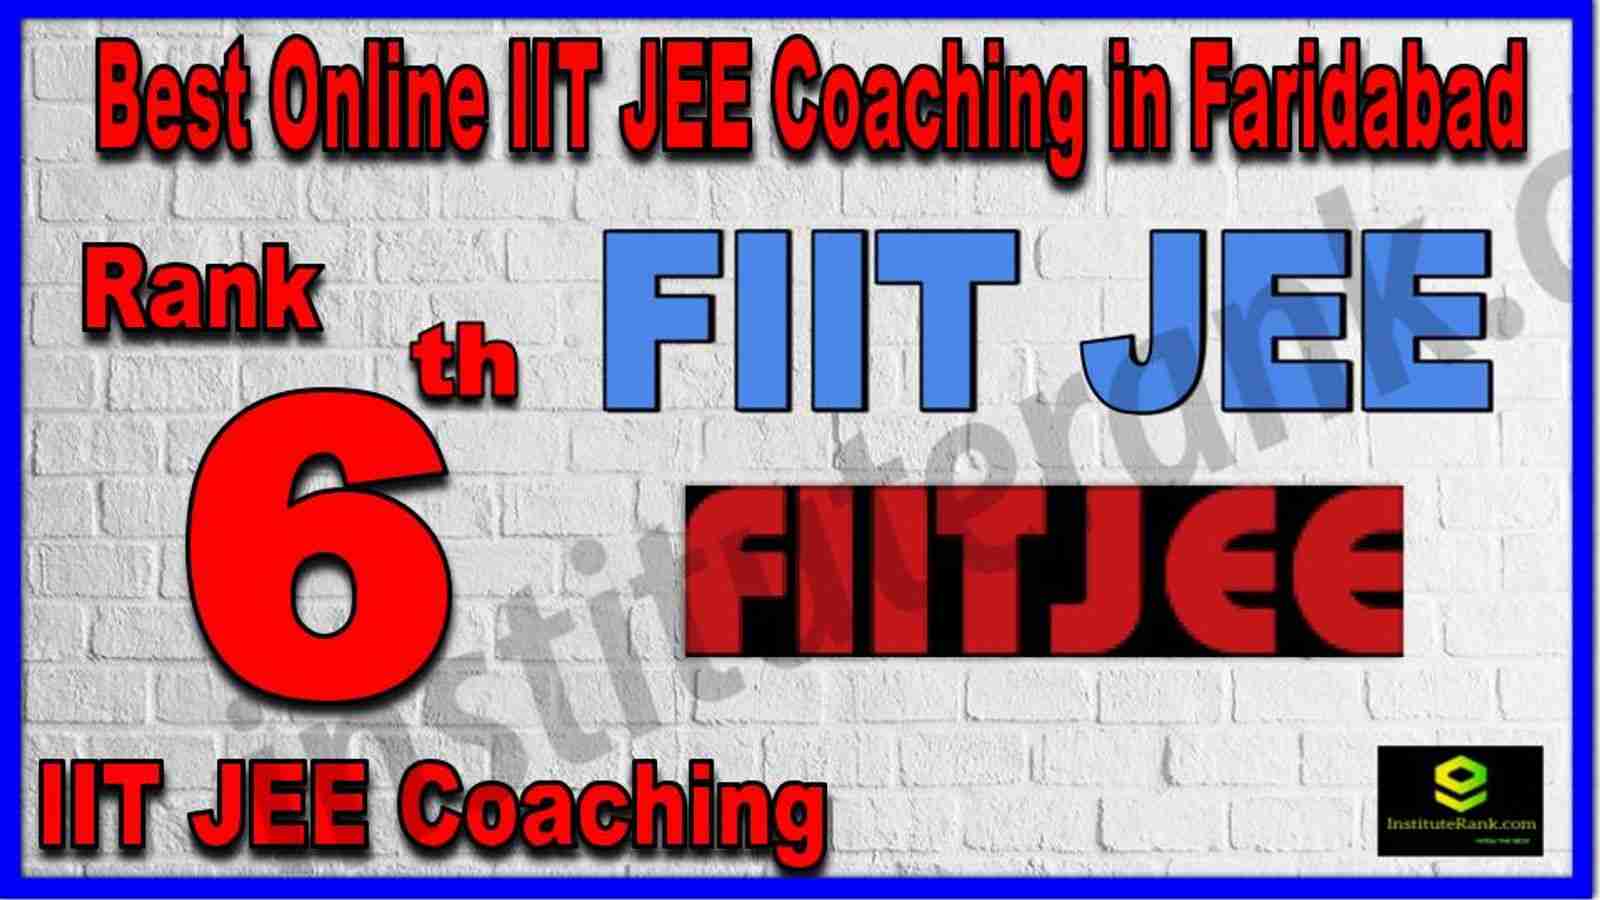 Rank 6th Best Online IIT JEE Coaching in Faridabad